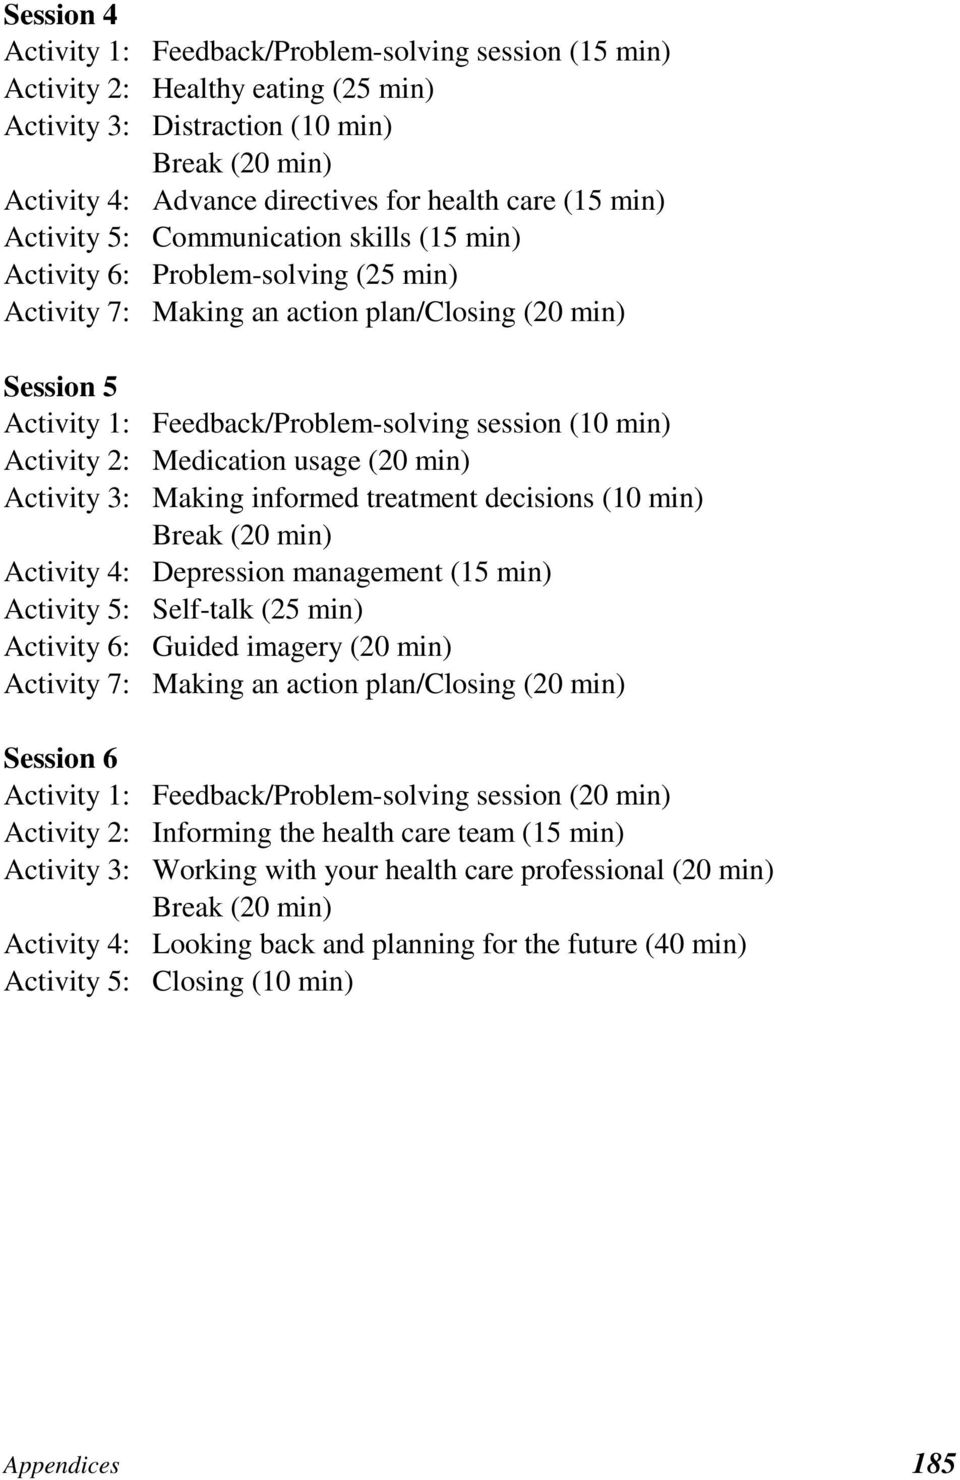 Activity 2: Medication usage (20 min) Activity 3: Making informed treatment decisions (10 min) Break (20 min) Activity 4: Depression management (15 min) Activity 5: Self-talk (25 min) Activity 6: